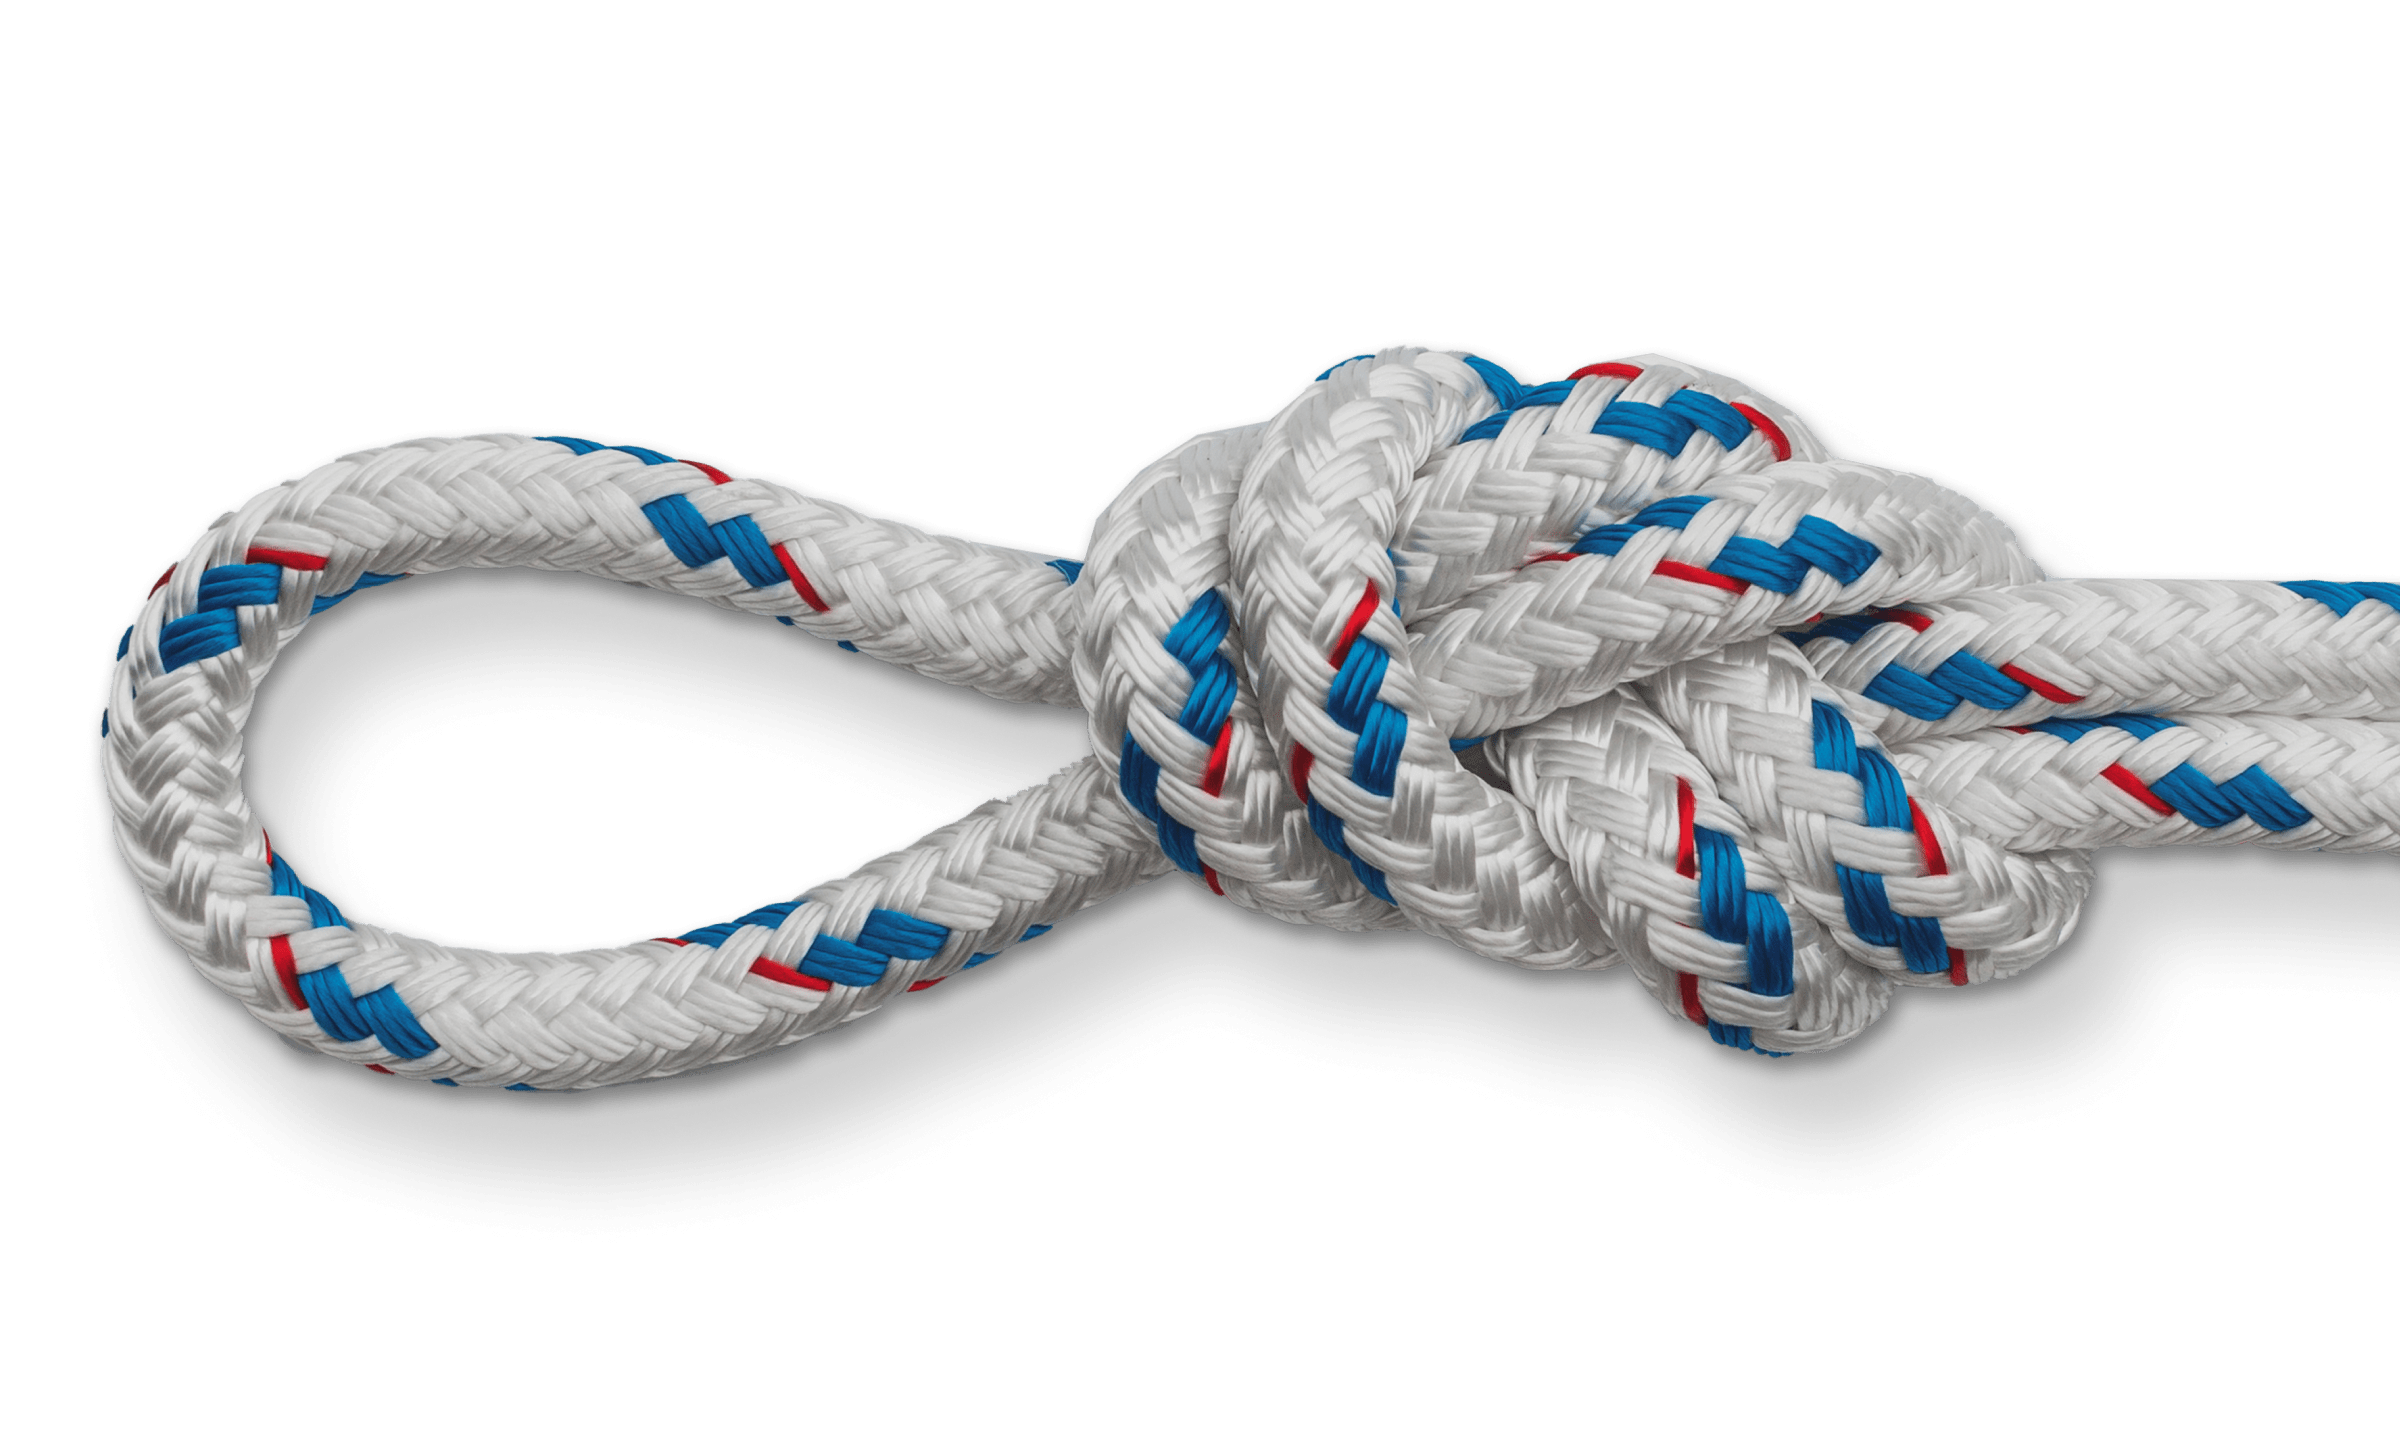 Sta-set double braid rope